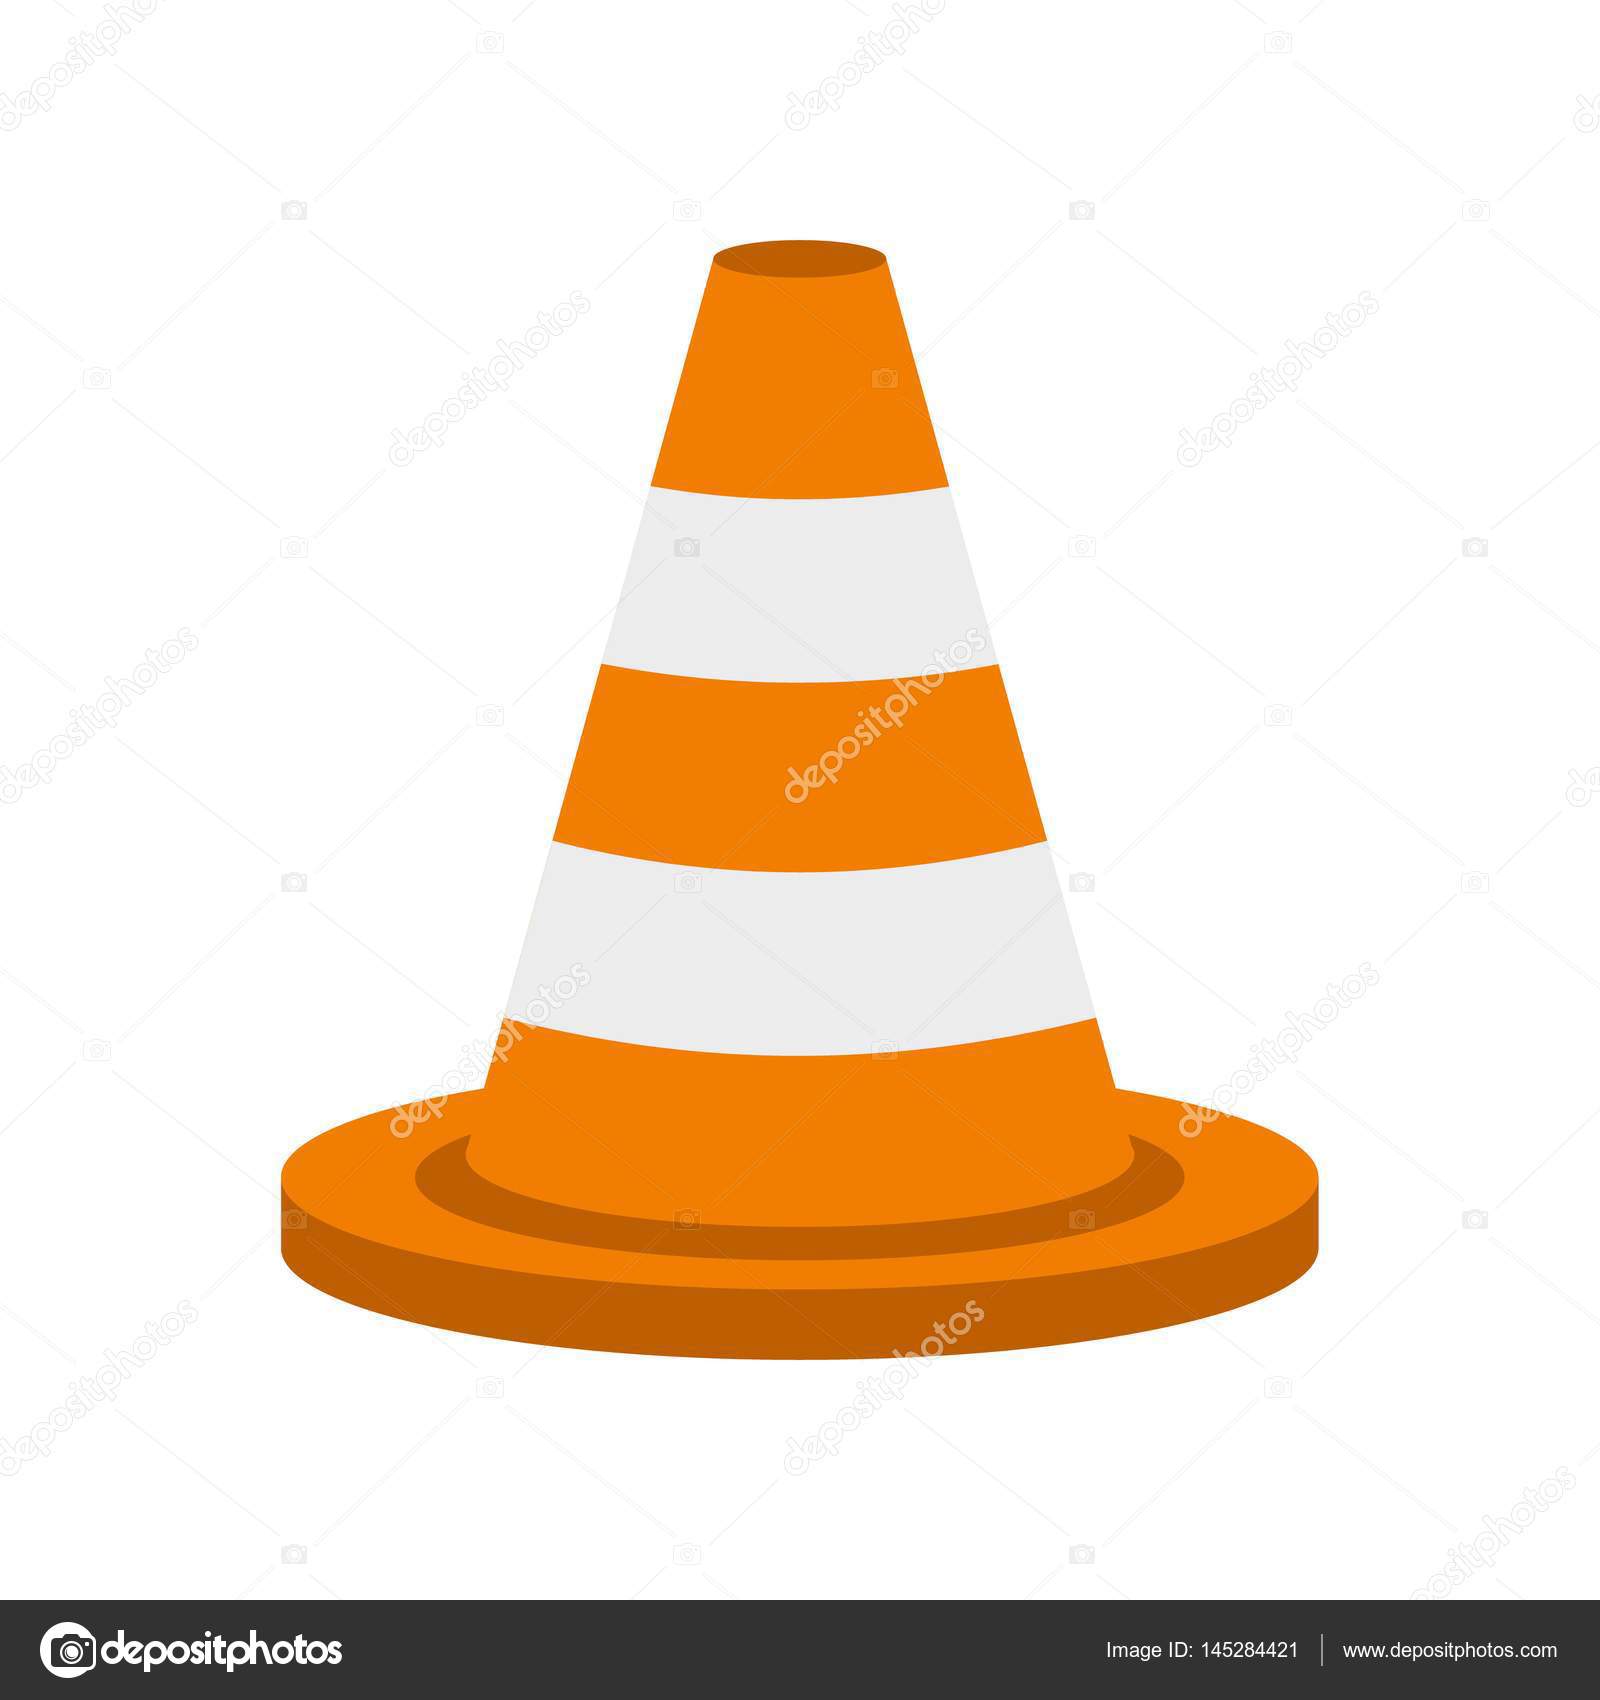 Singgle traffic cone photo